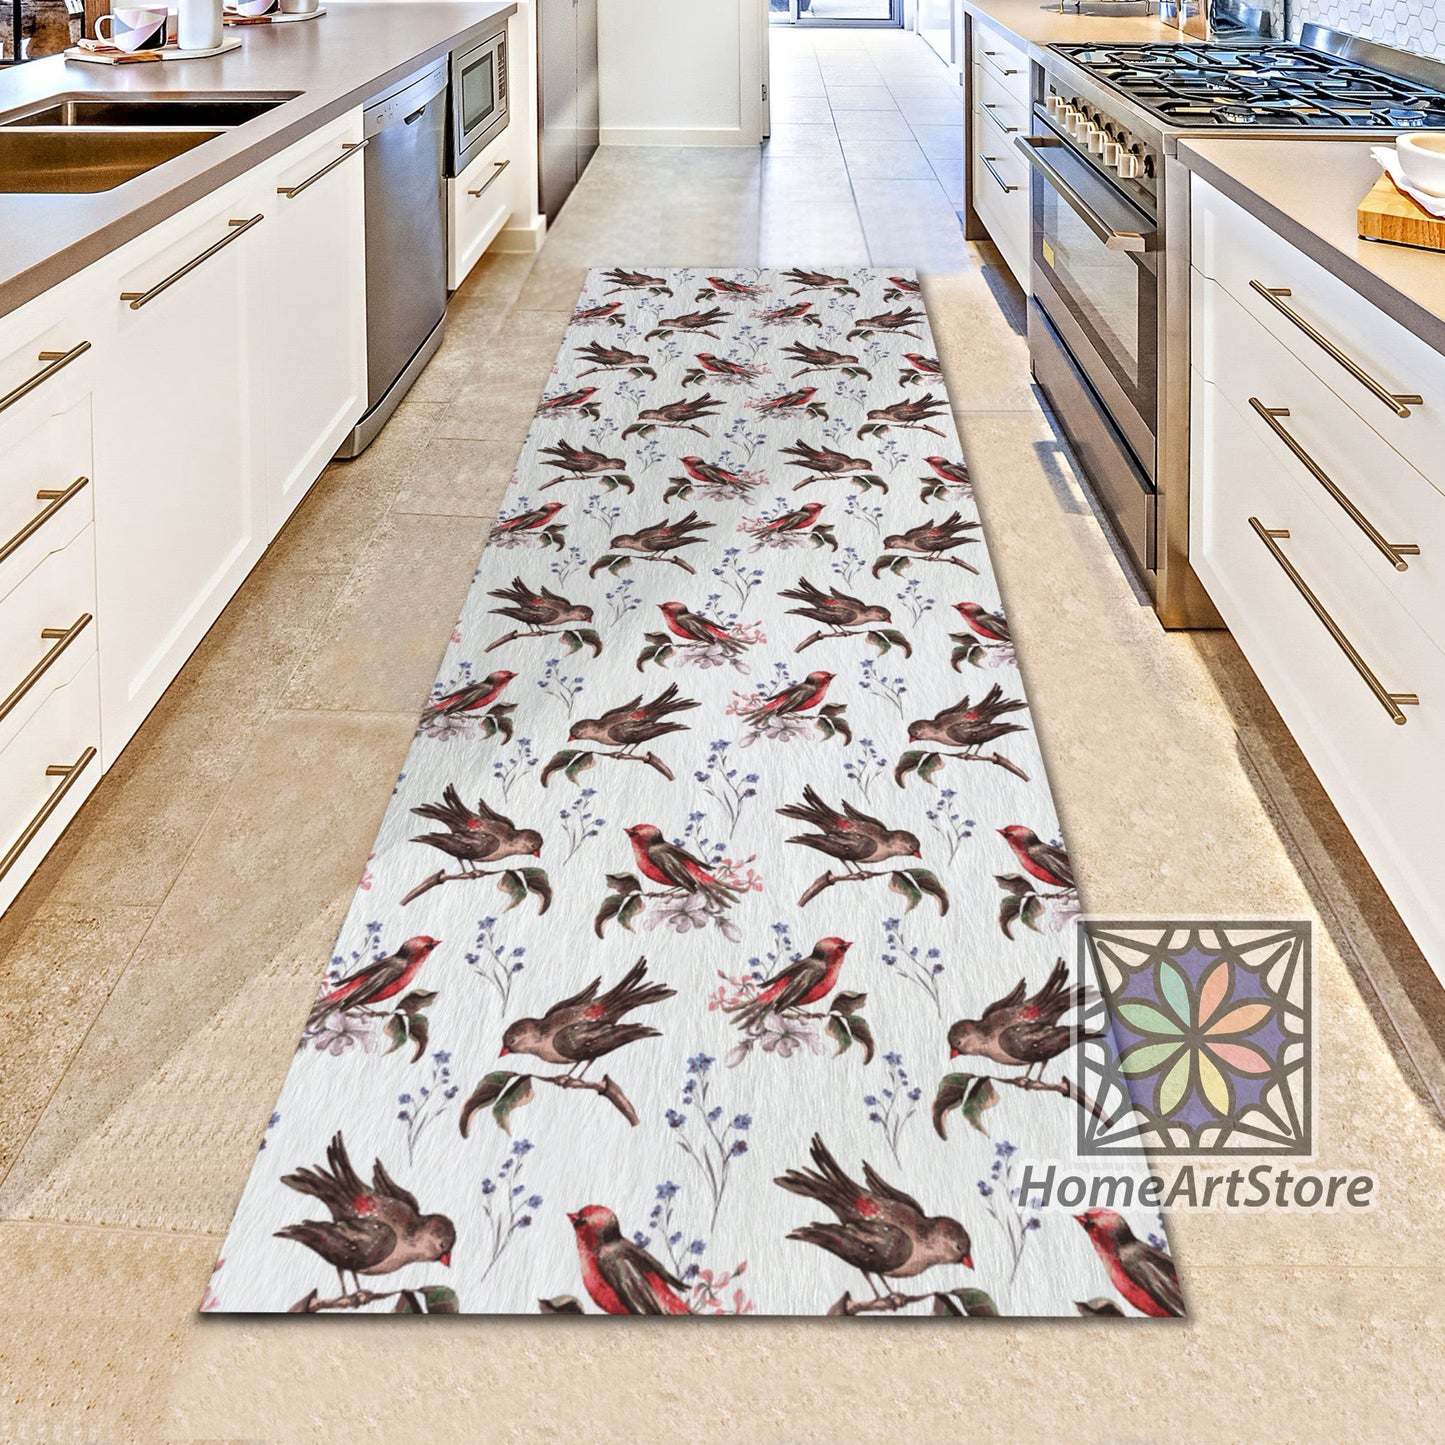 Retro Style Floral Runner Rug, Bird Pattern Carpet, Entryway Runner Mat, Modern Home Decor